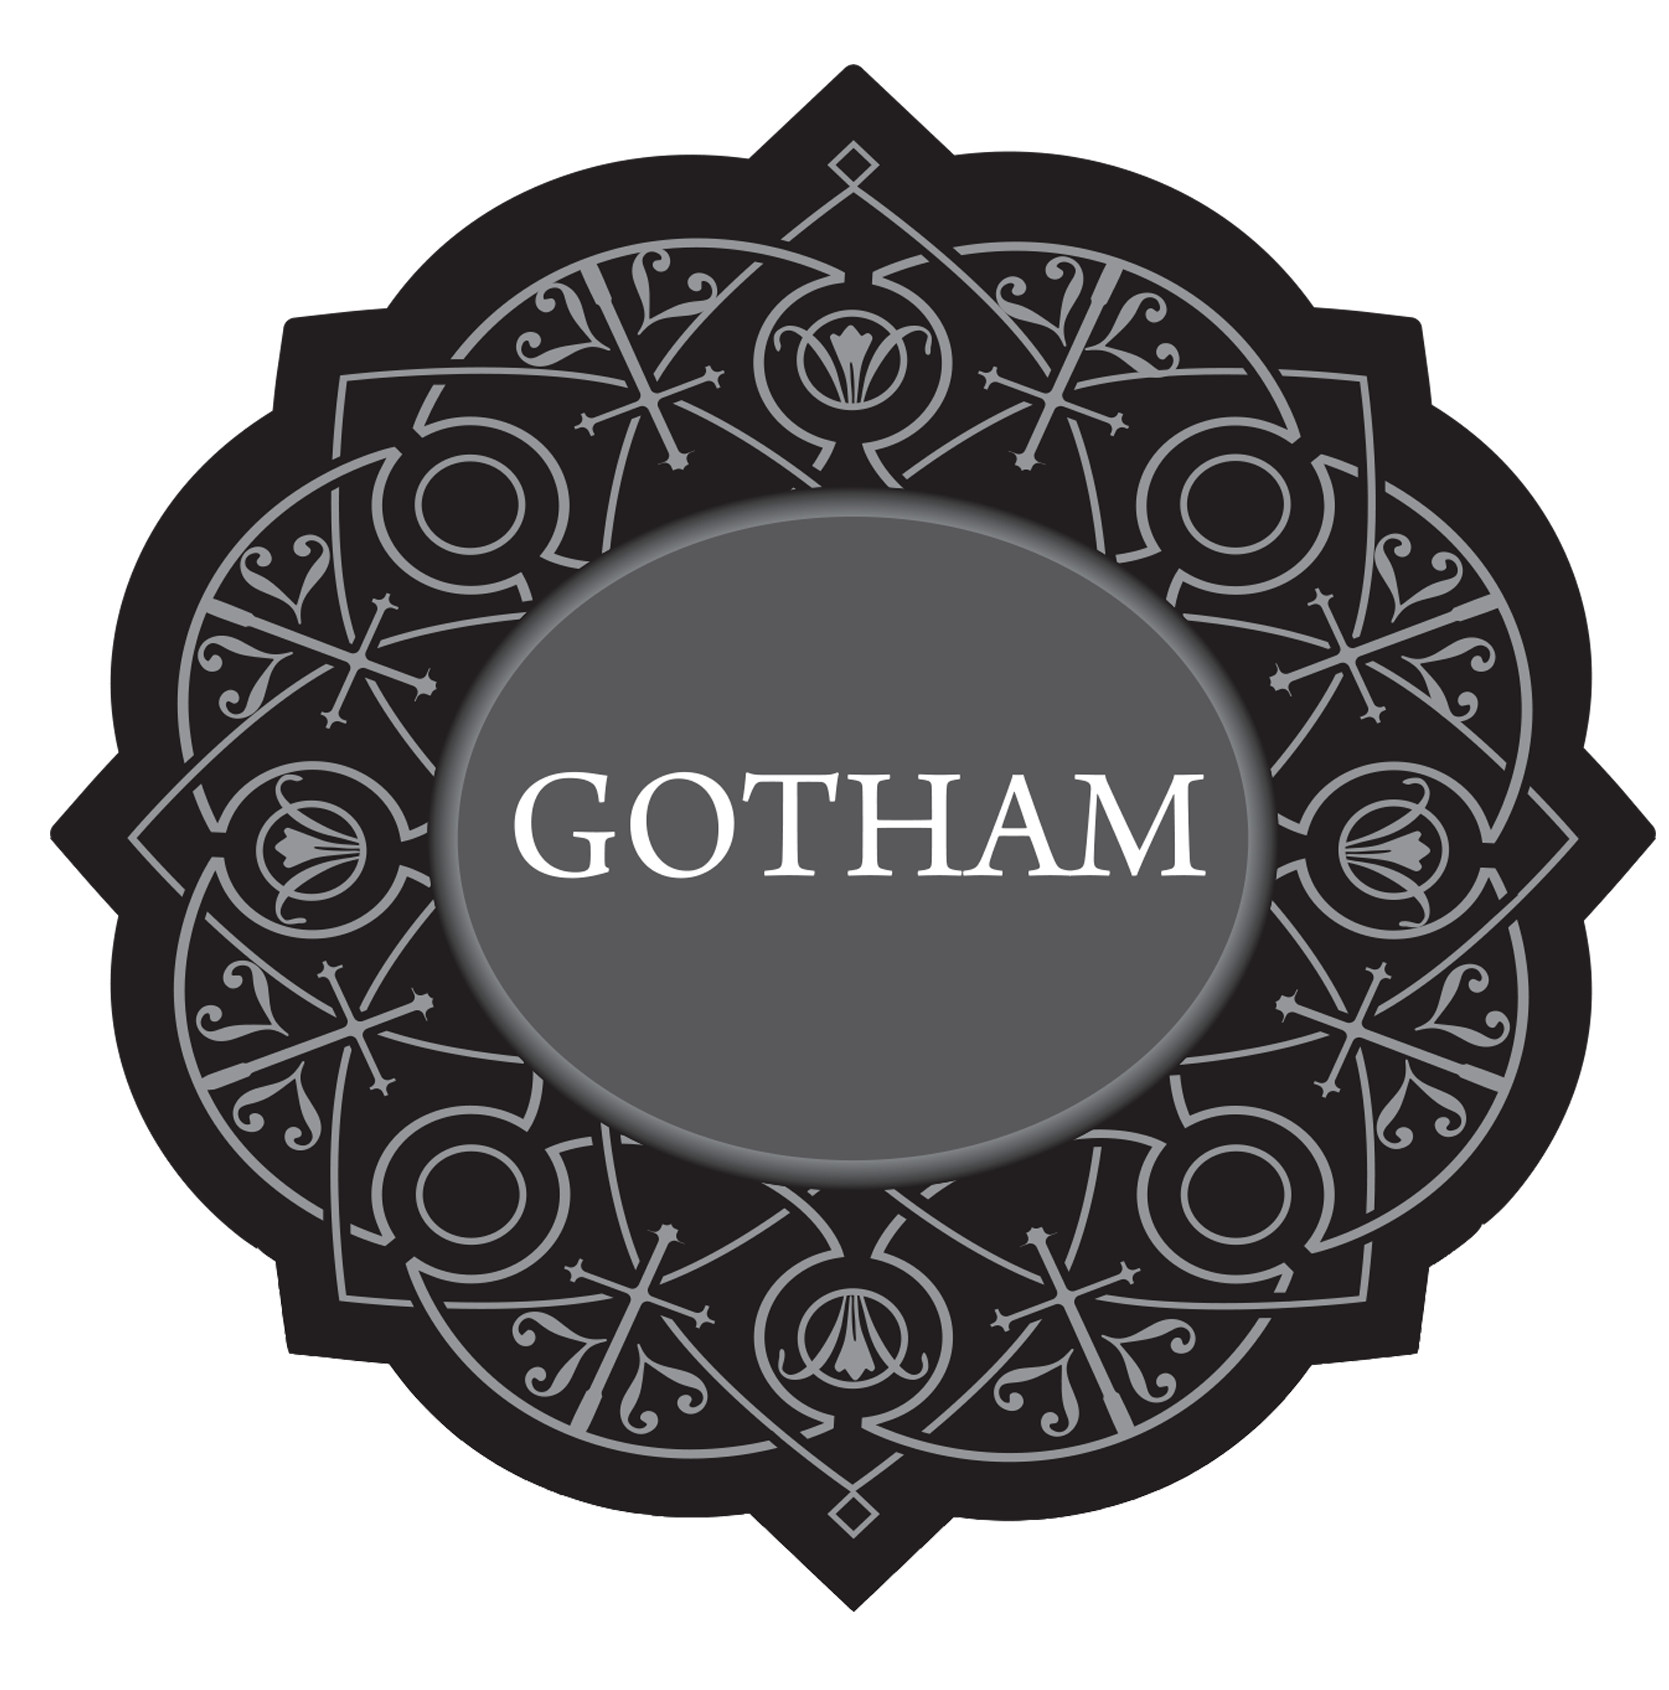 Gotham Wines logo